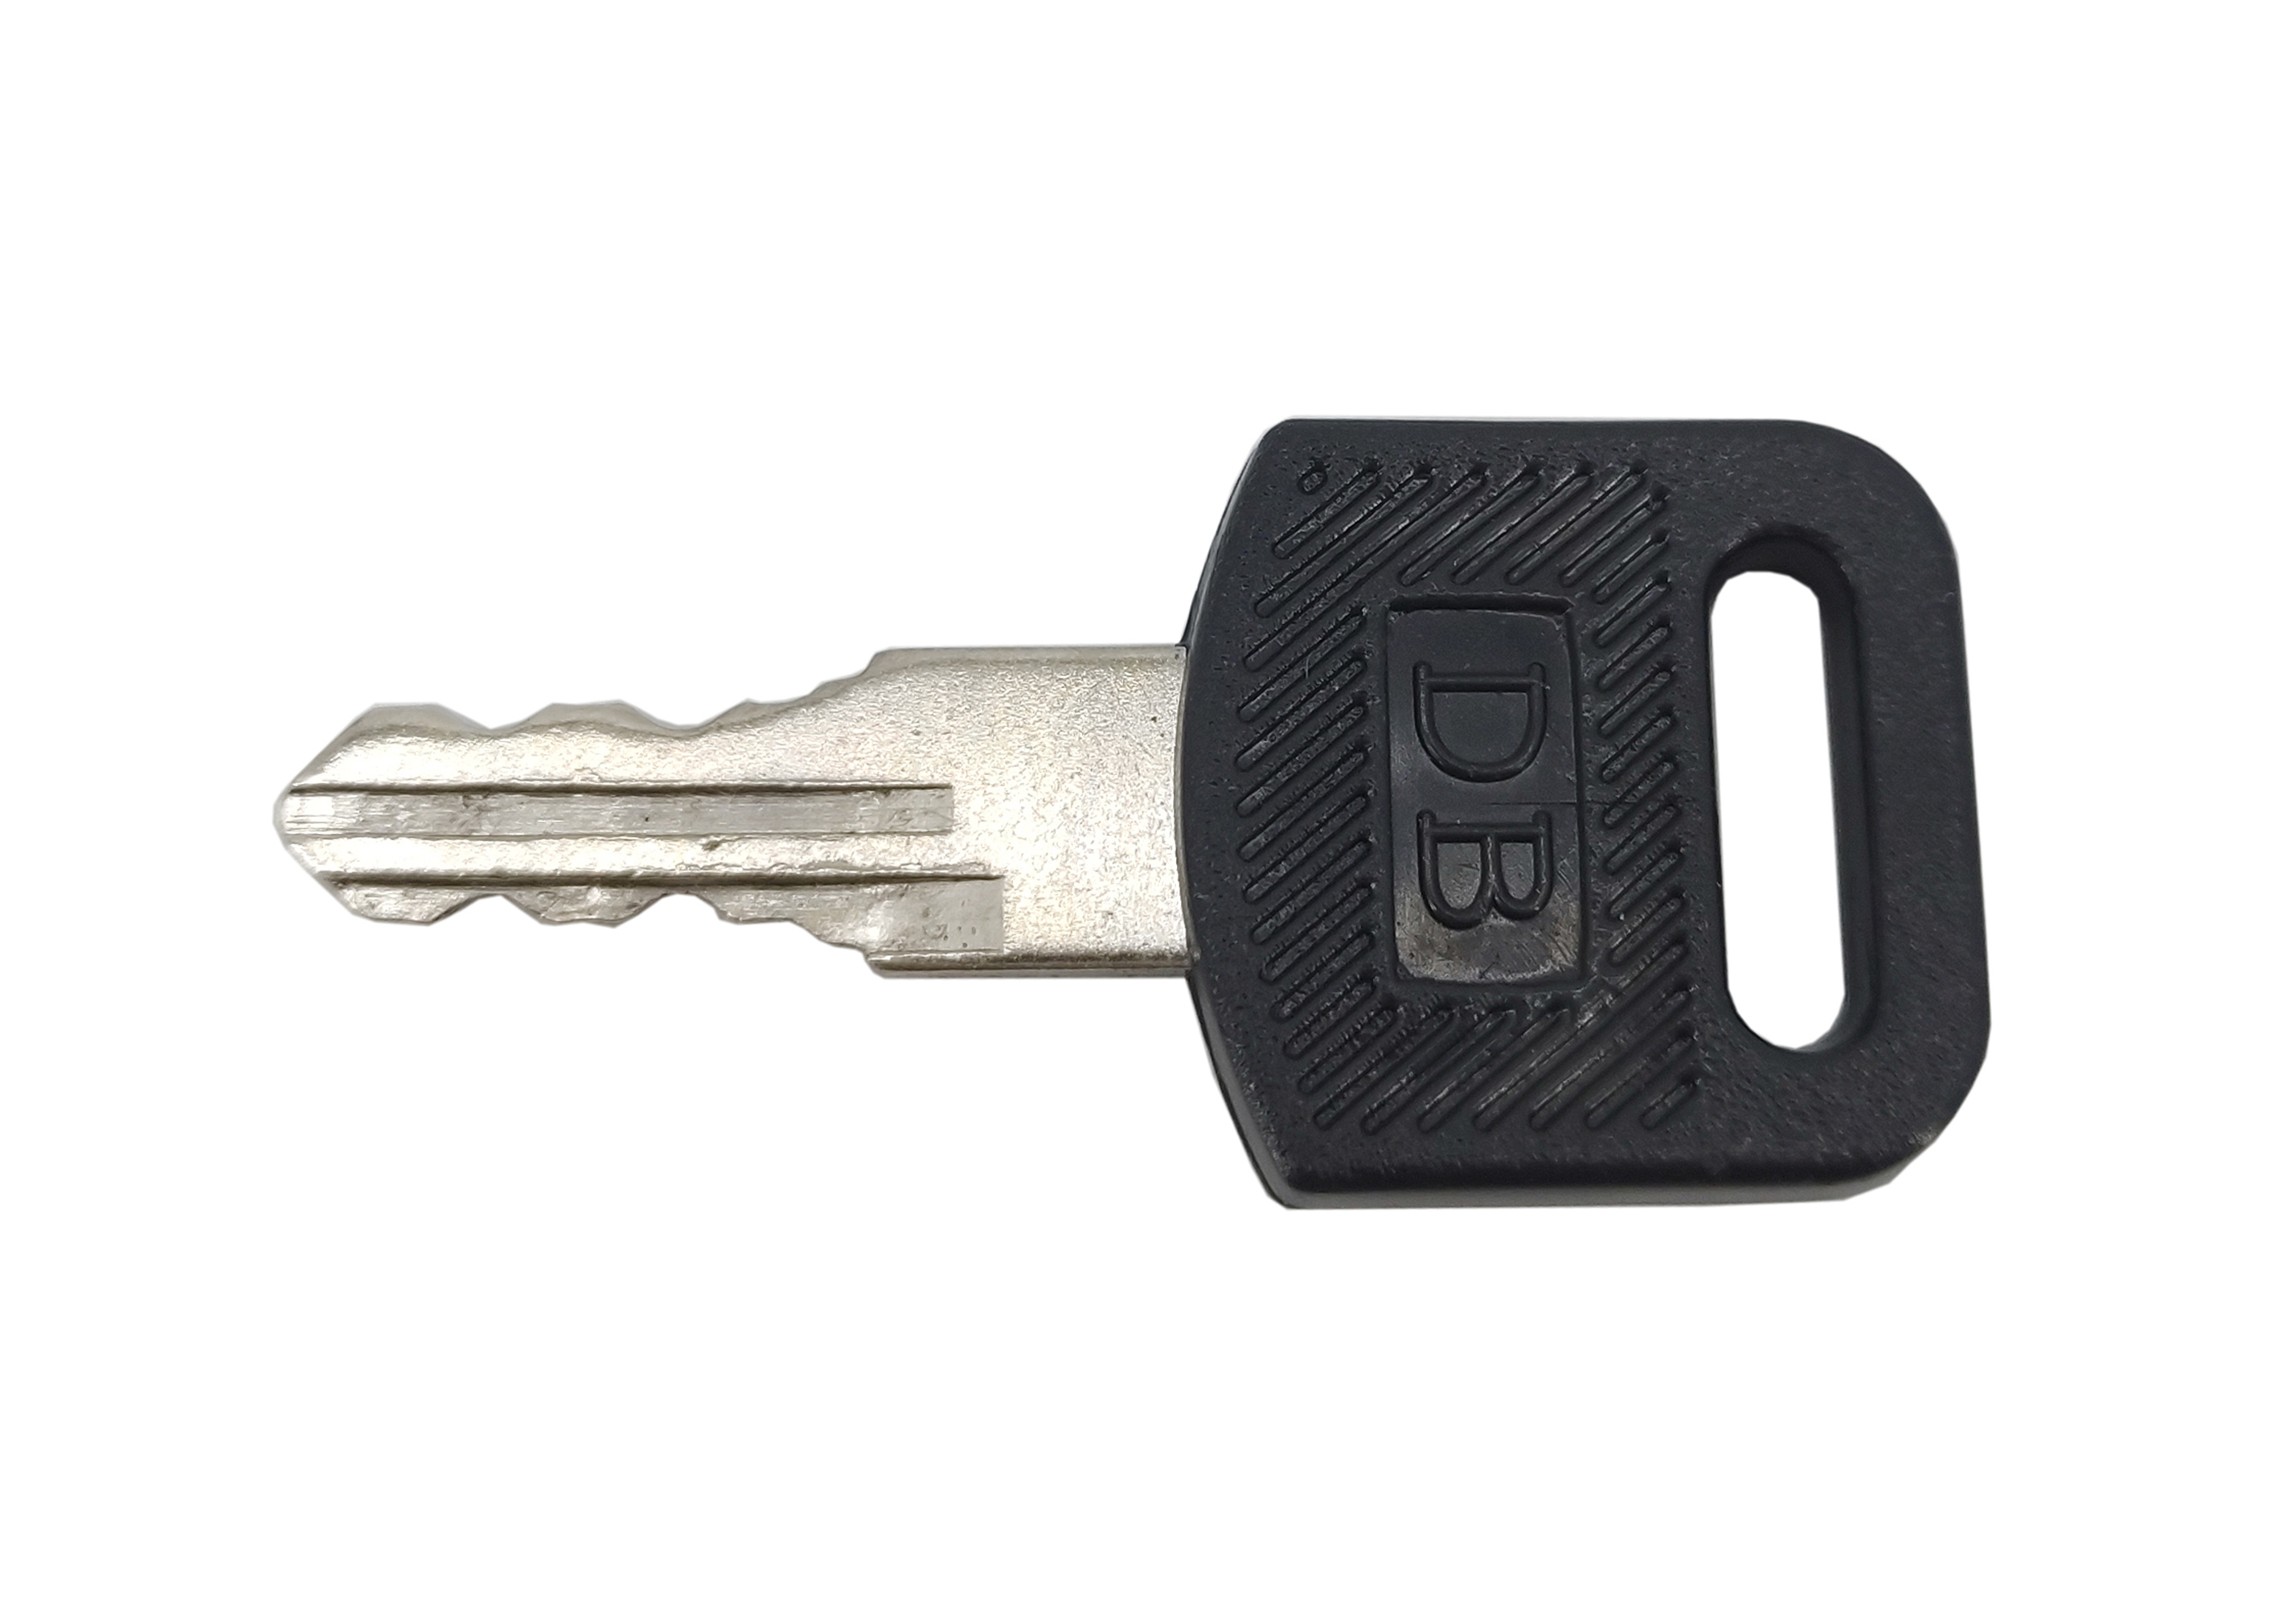 FixtureDisplays Suggestion Box Key Donation Box Key Blank Must Match Your Key Shape To Work Spare Key 1041